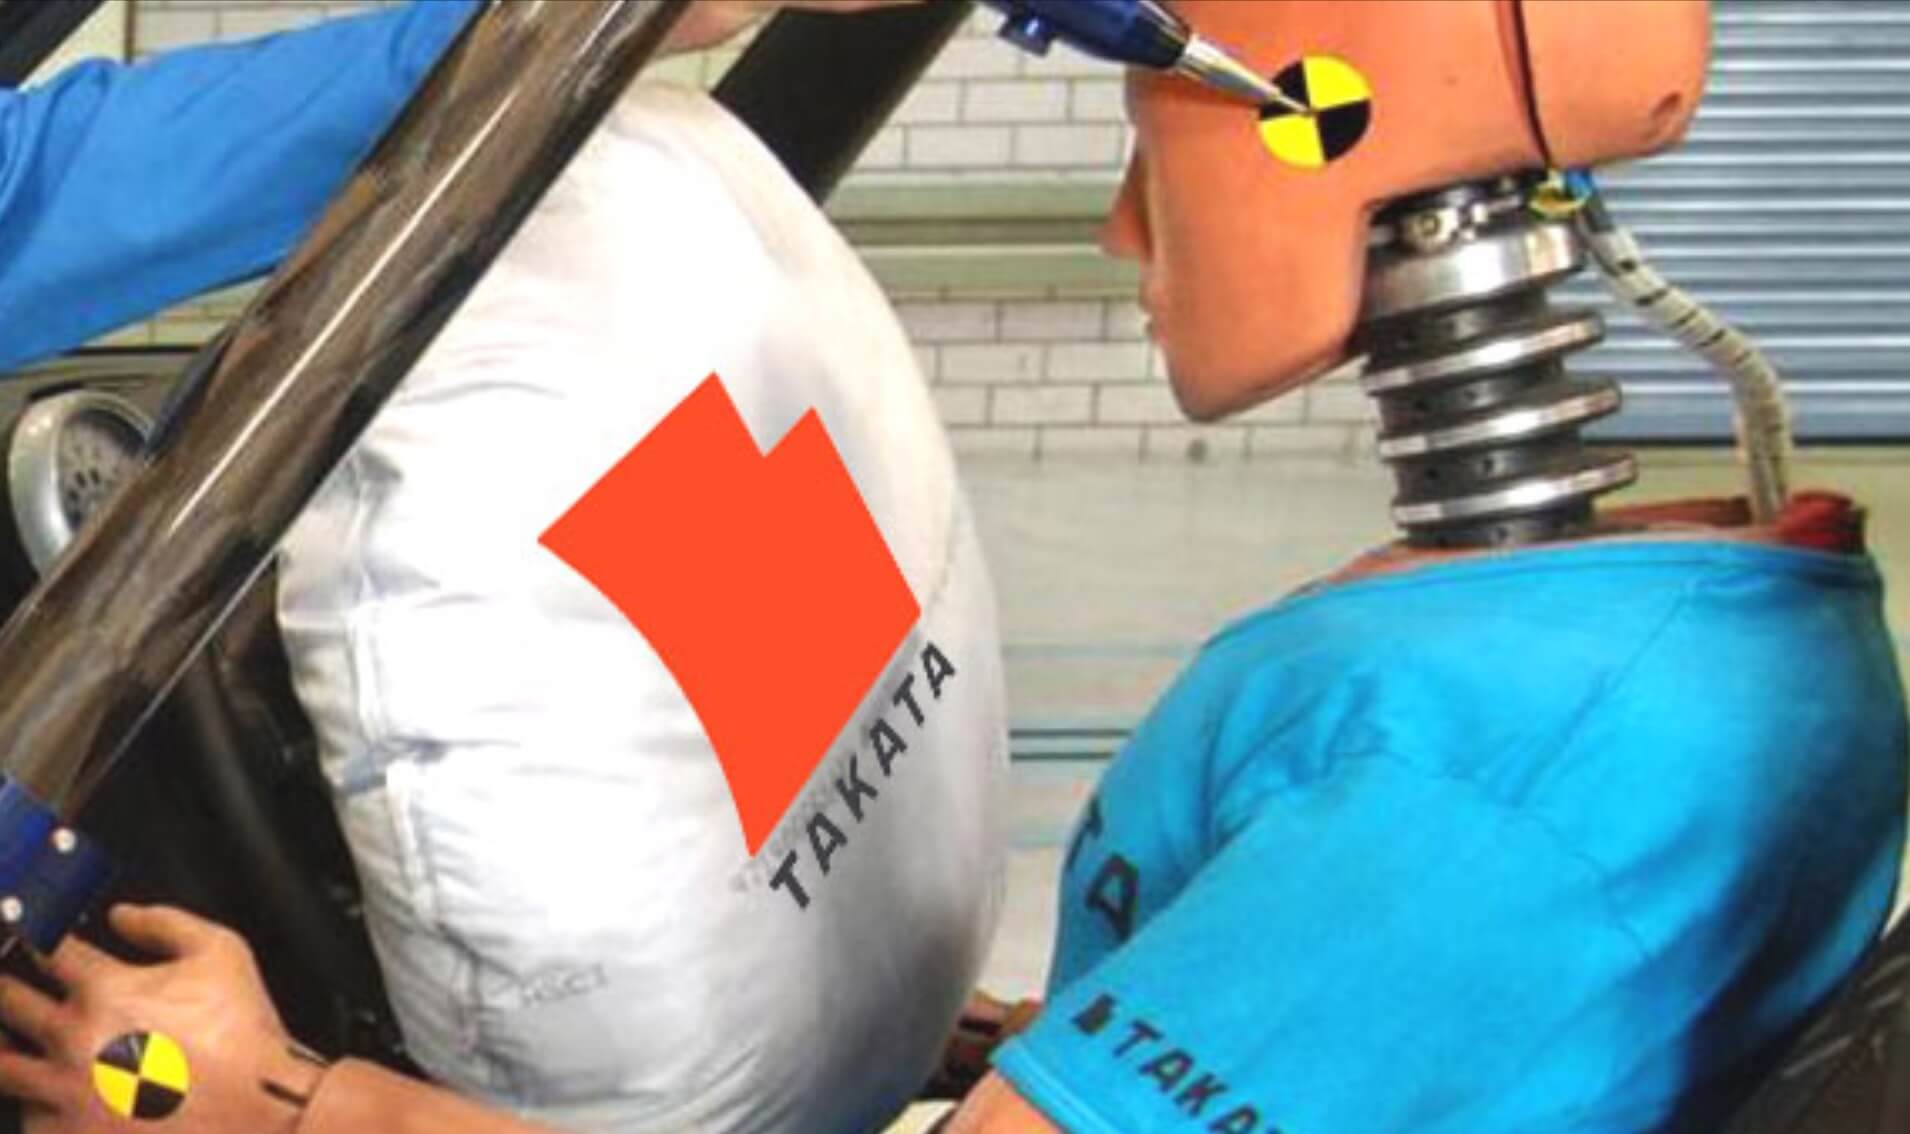 Takata Airbag Injury Claims